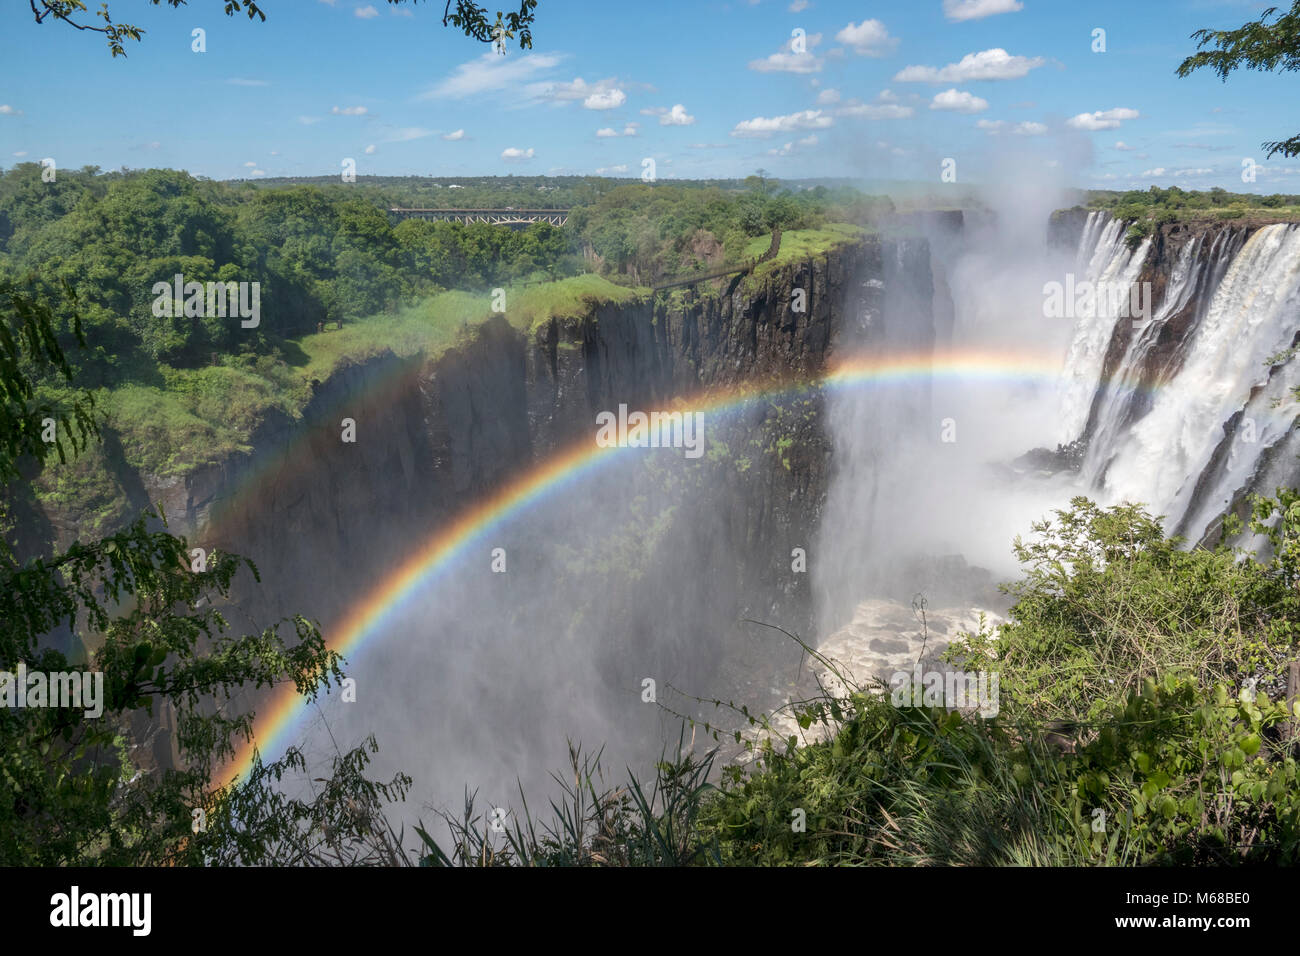 Victoria Falls - Wide angle view Stock Photo